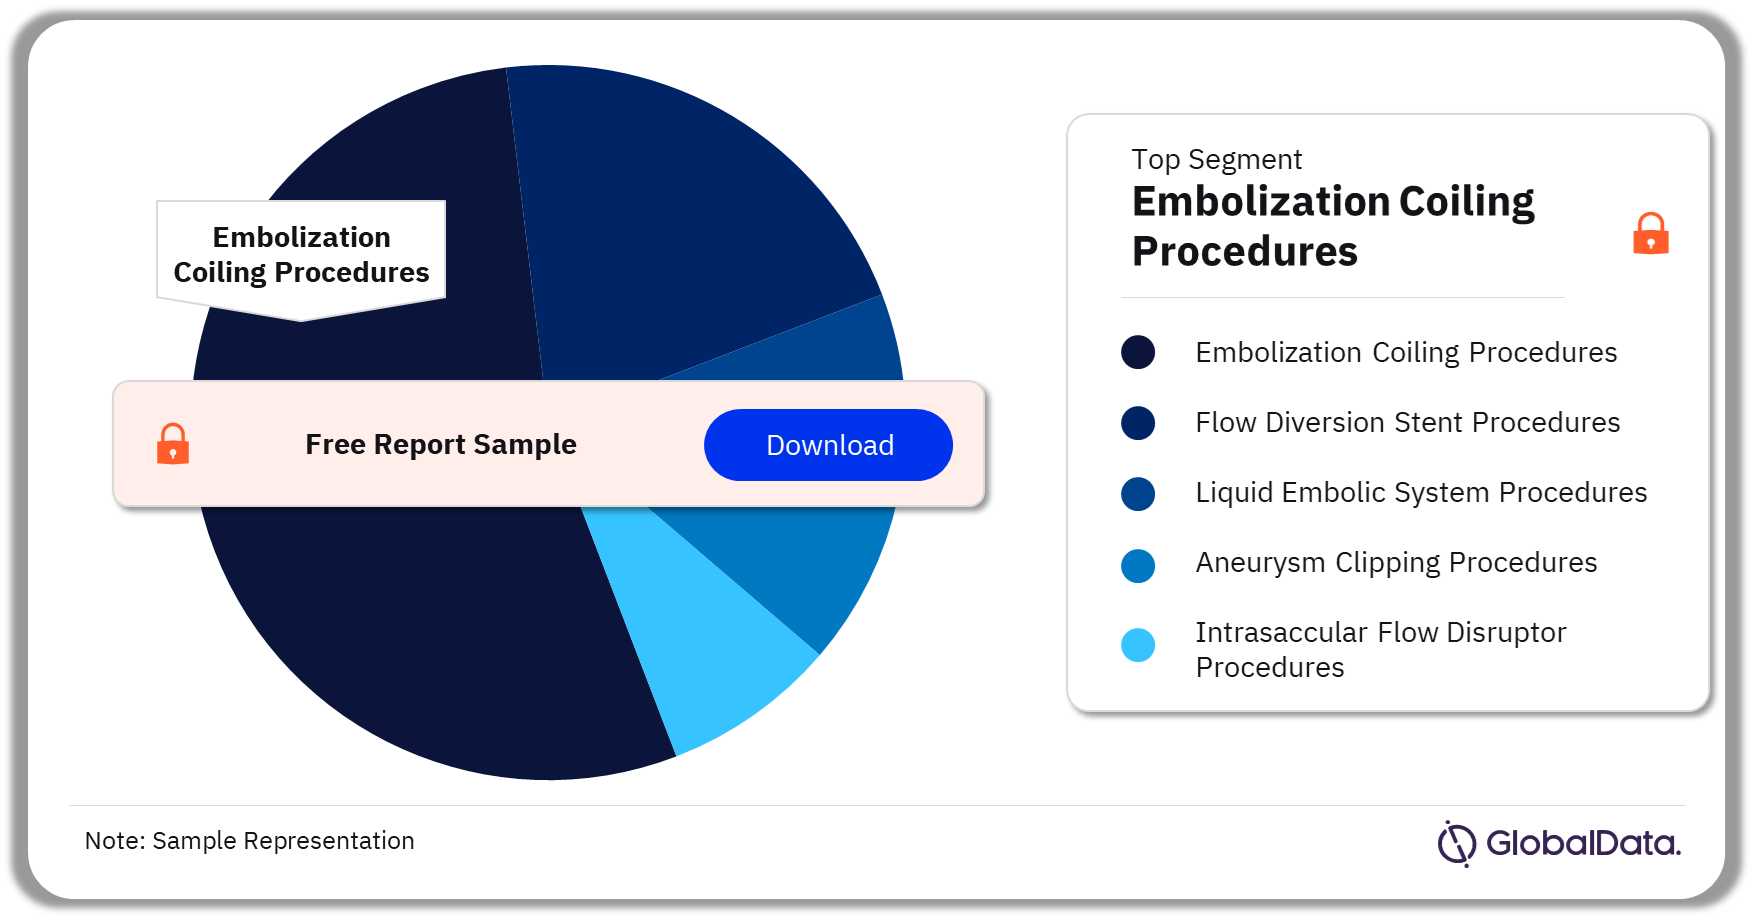 EU5 Neurovascular Embolization Procedures Market Analysis by Segments, 2022 (%)